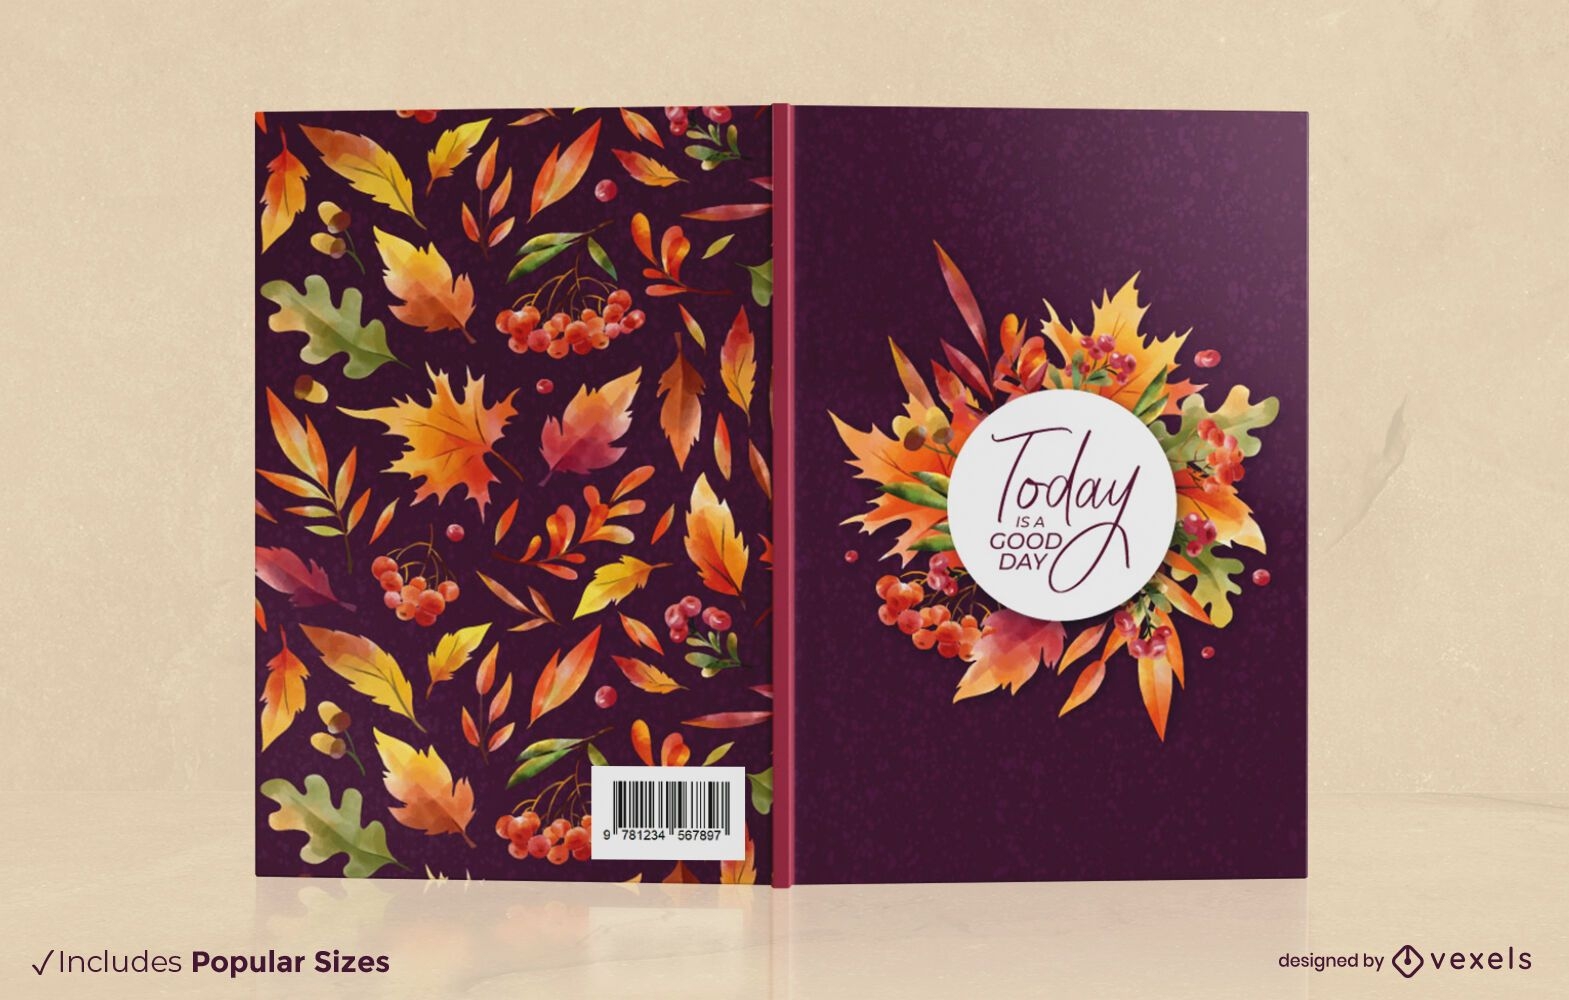 Autumn season leaves book cover design